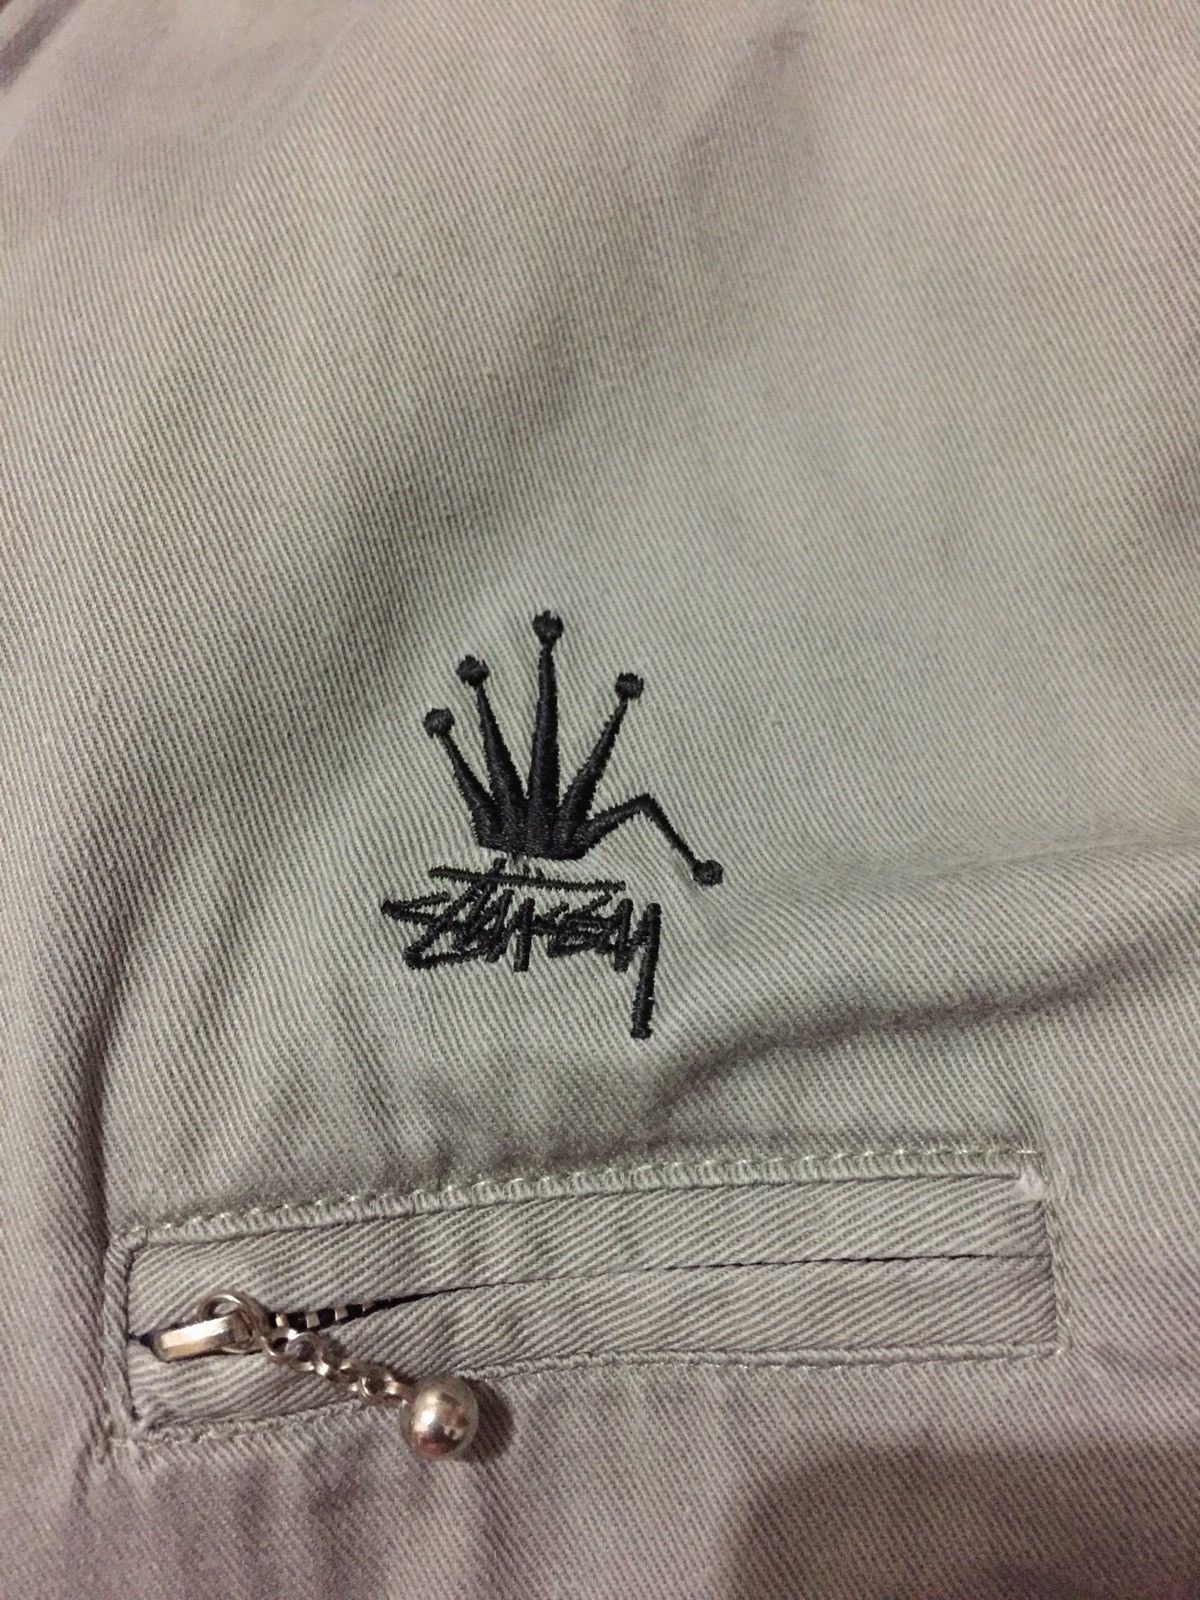 Stussy Vintage Stussy Zipper Jacket//American Streetwear Brand//Made in USA Size US L / EU 52-54 / 3 - 5 Thumbnail